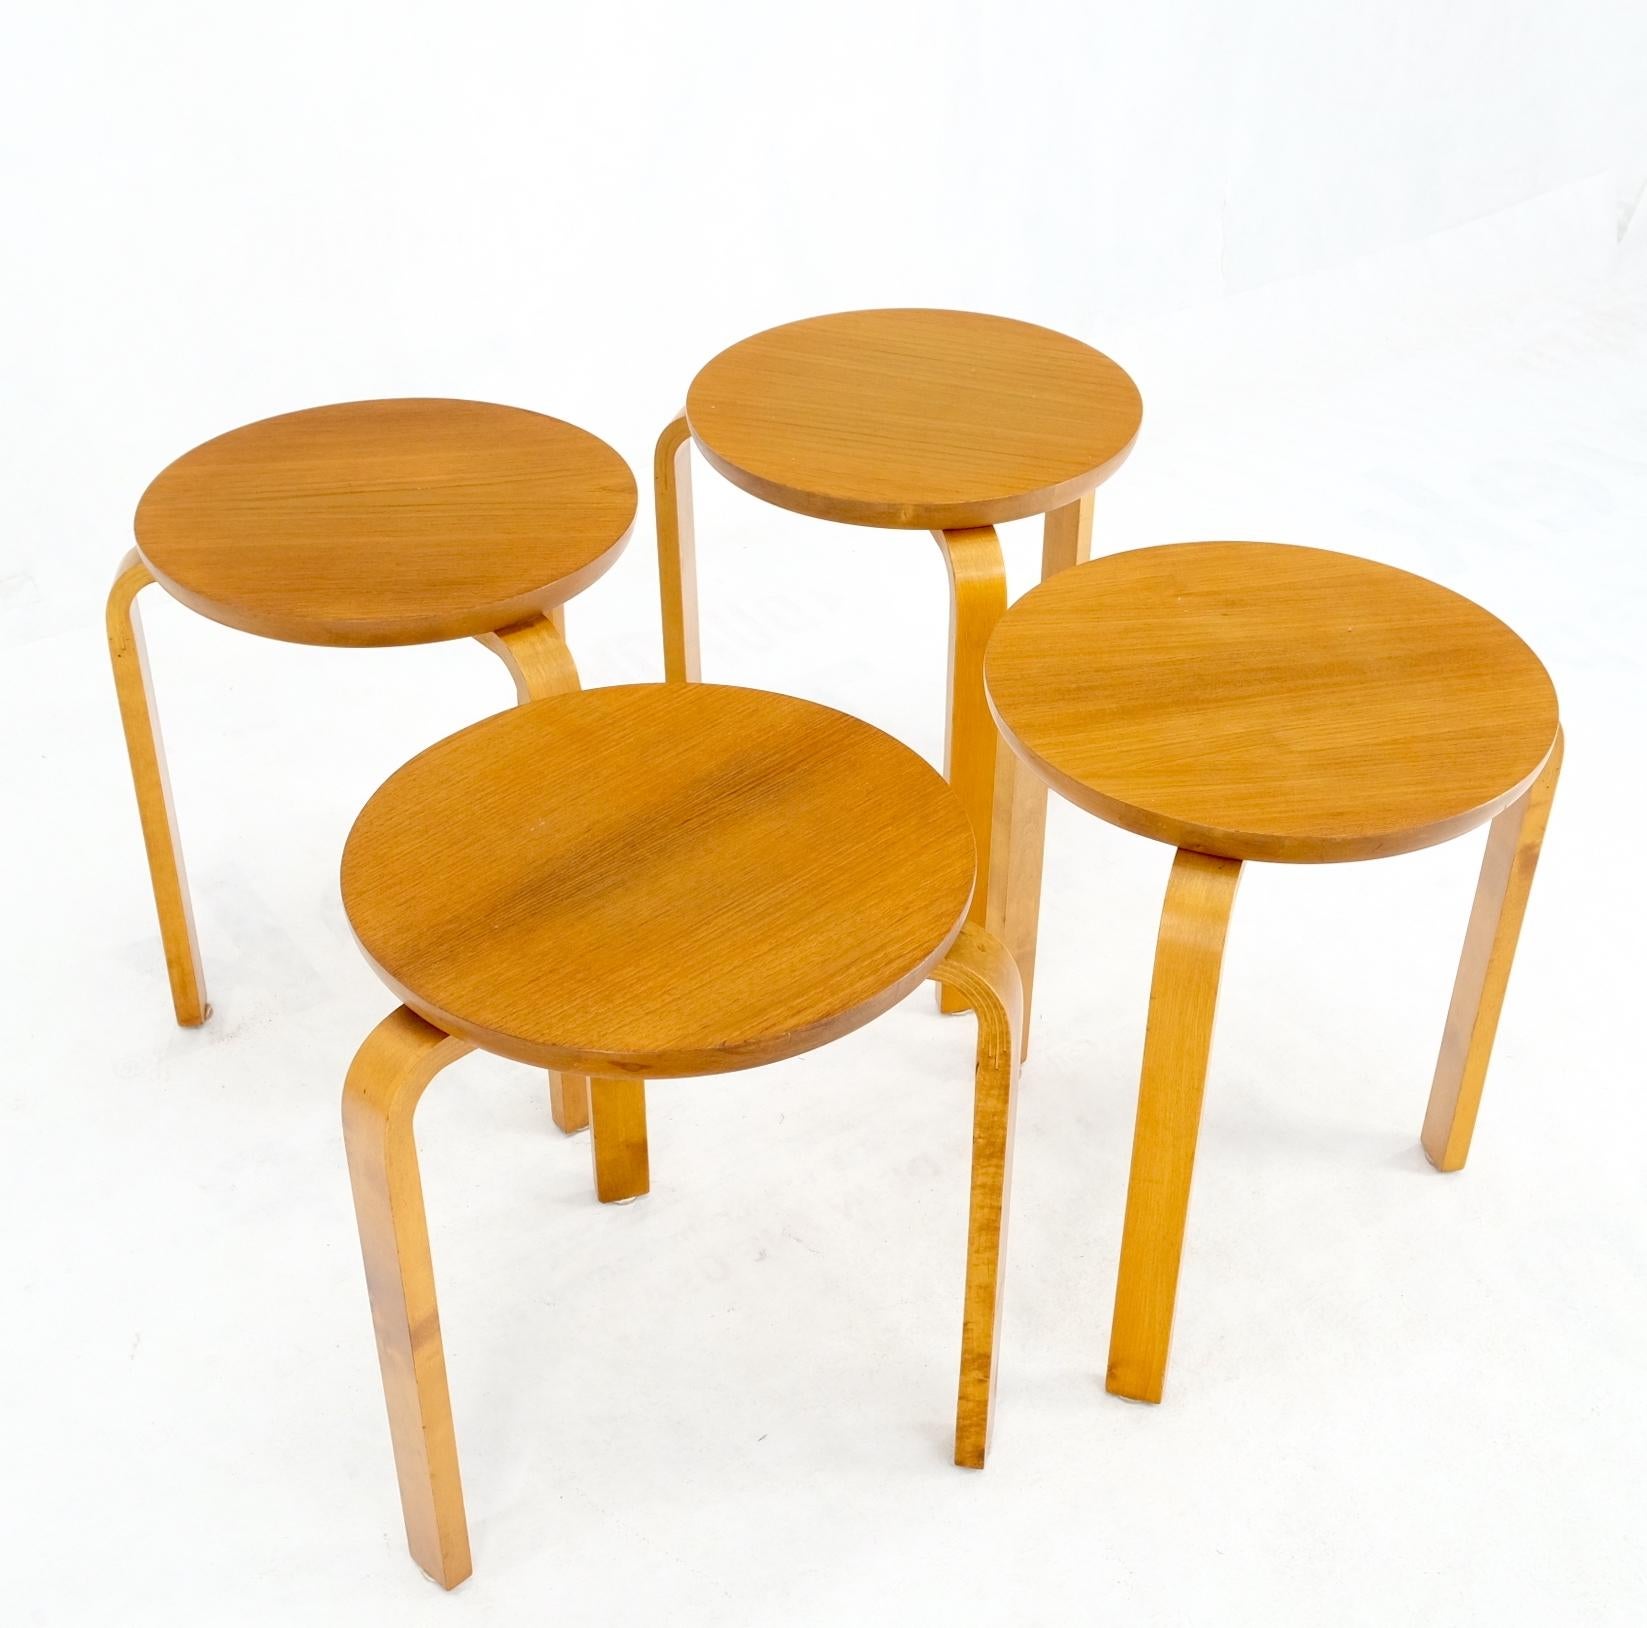 Set of 4 Alvar Aalto Round Birch Bent Leg Nesting Tables c.1950s Made in Sweden For Sale 5